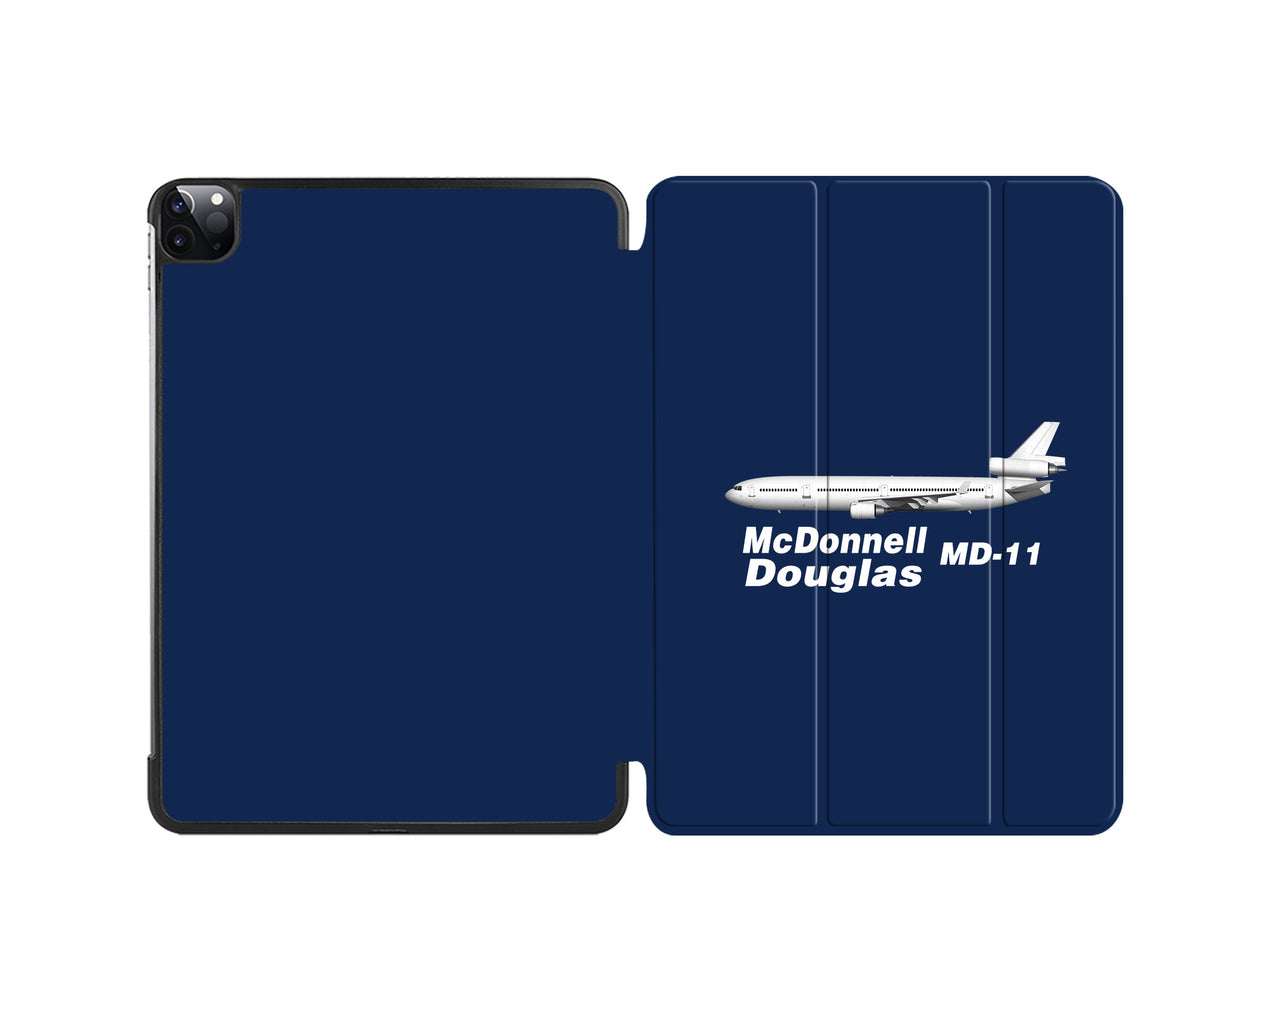 The McDonnell Douglas MD-11 Douglas F18 Designed iPad Cases